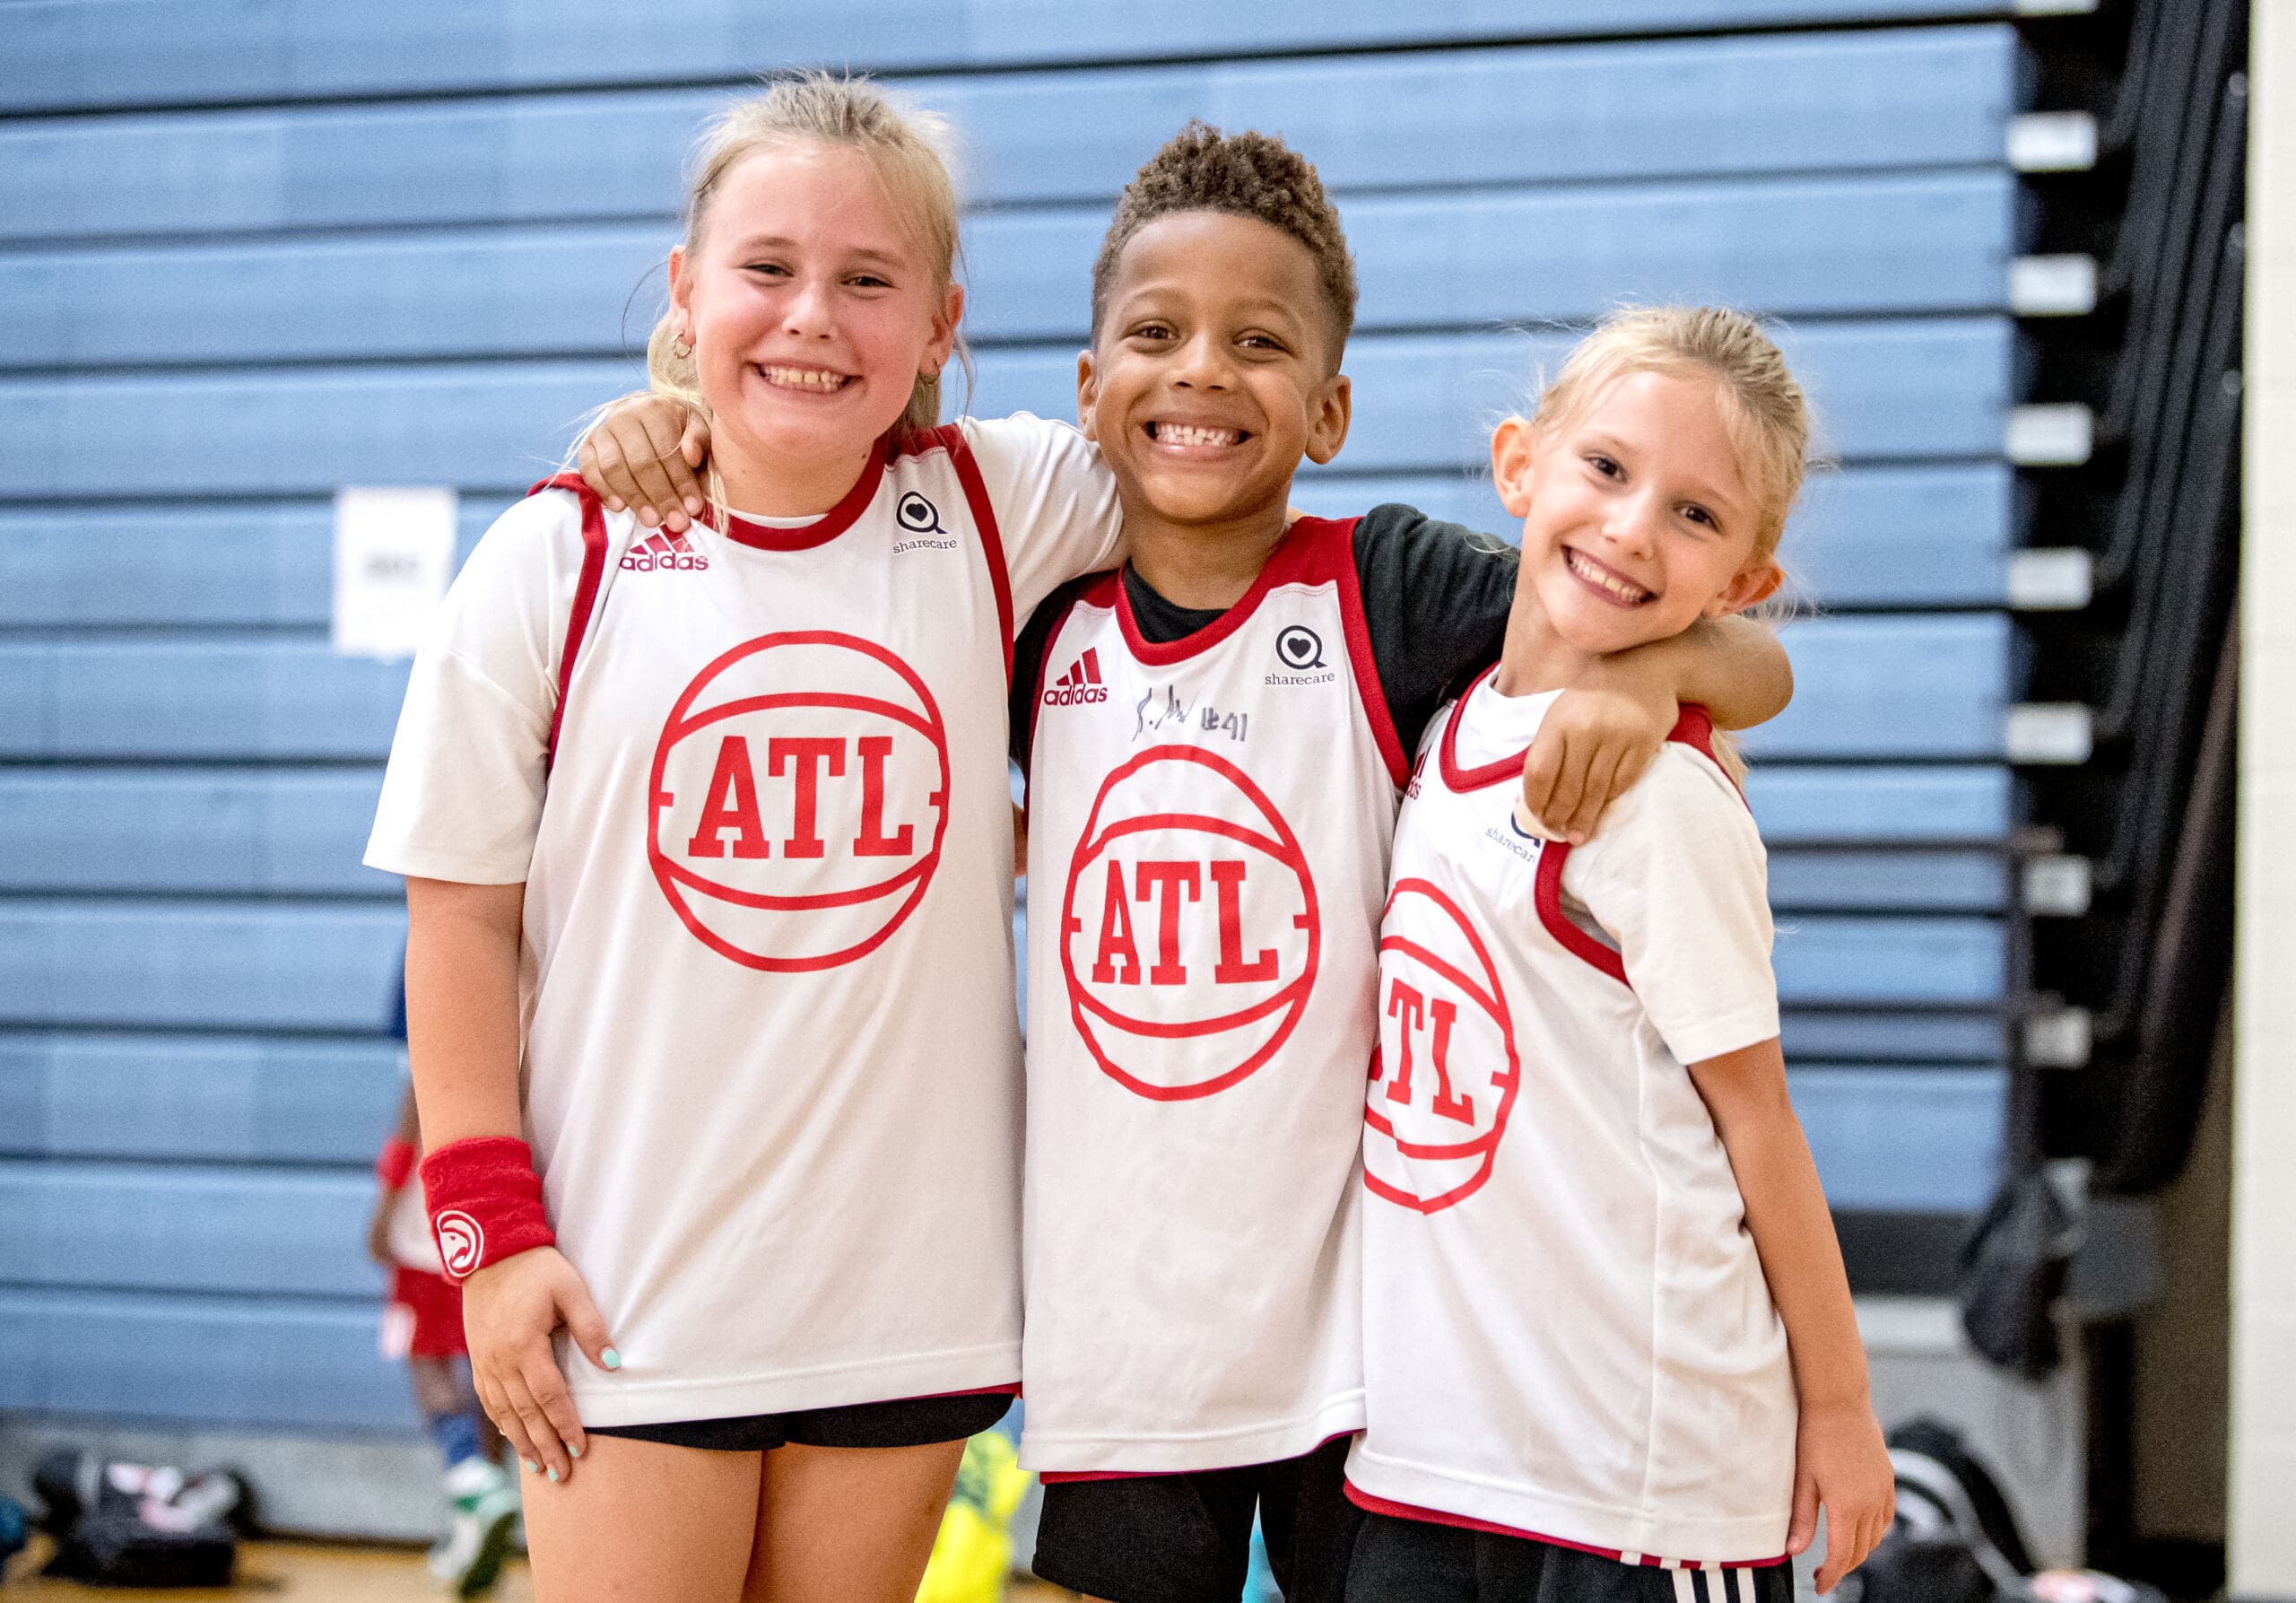 Youth Sports Teams and Training - Atlanta, Georgia